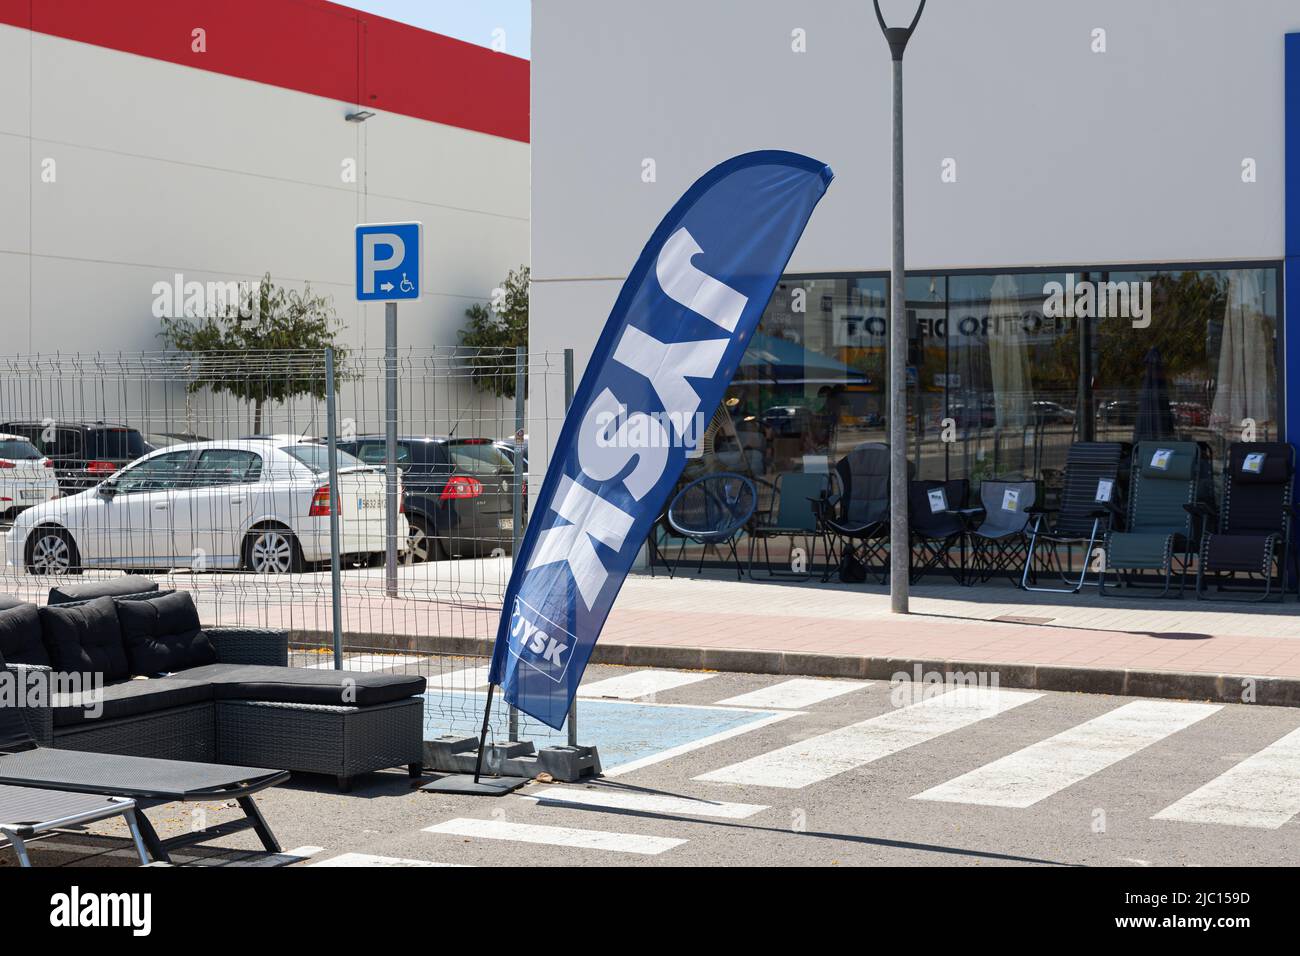 ALFAFAR, SPAIN - JUNE 06, 2022: Jysk is a Danish retail chain selling  household goods Stock Photo - Alamy